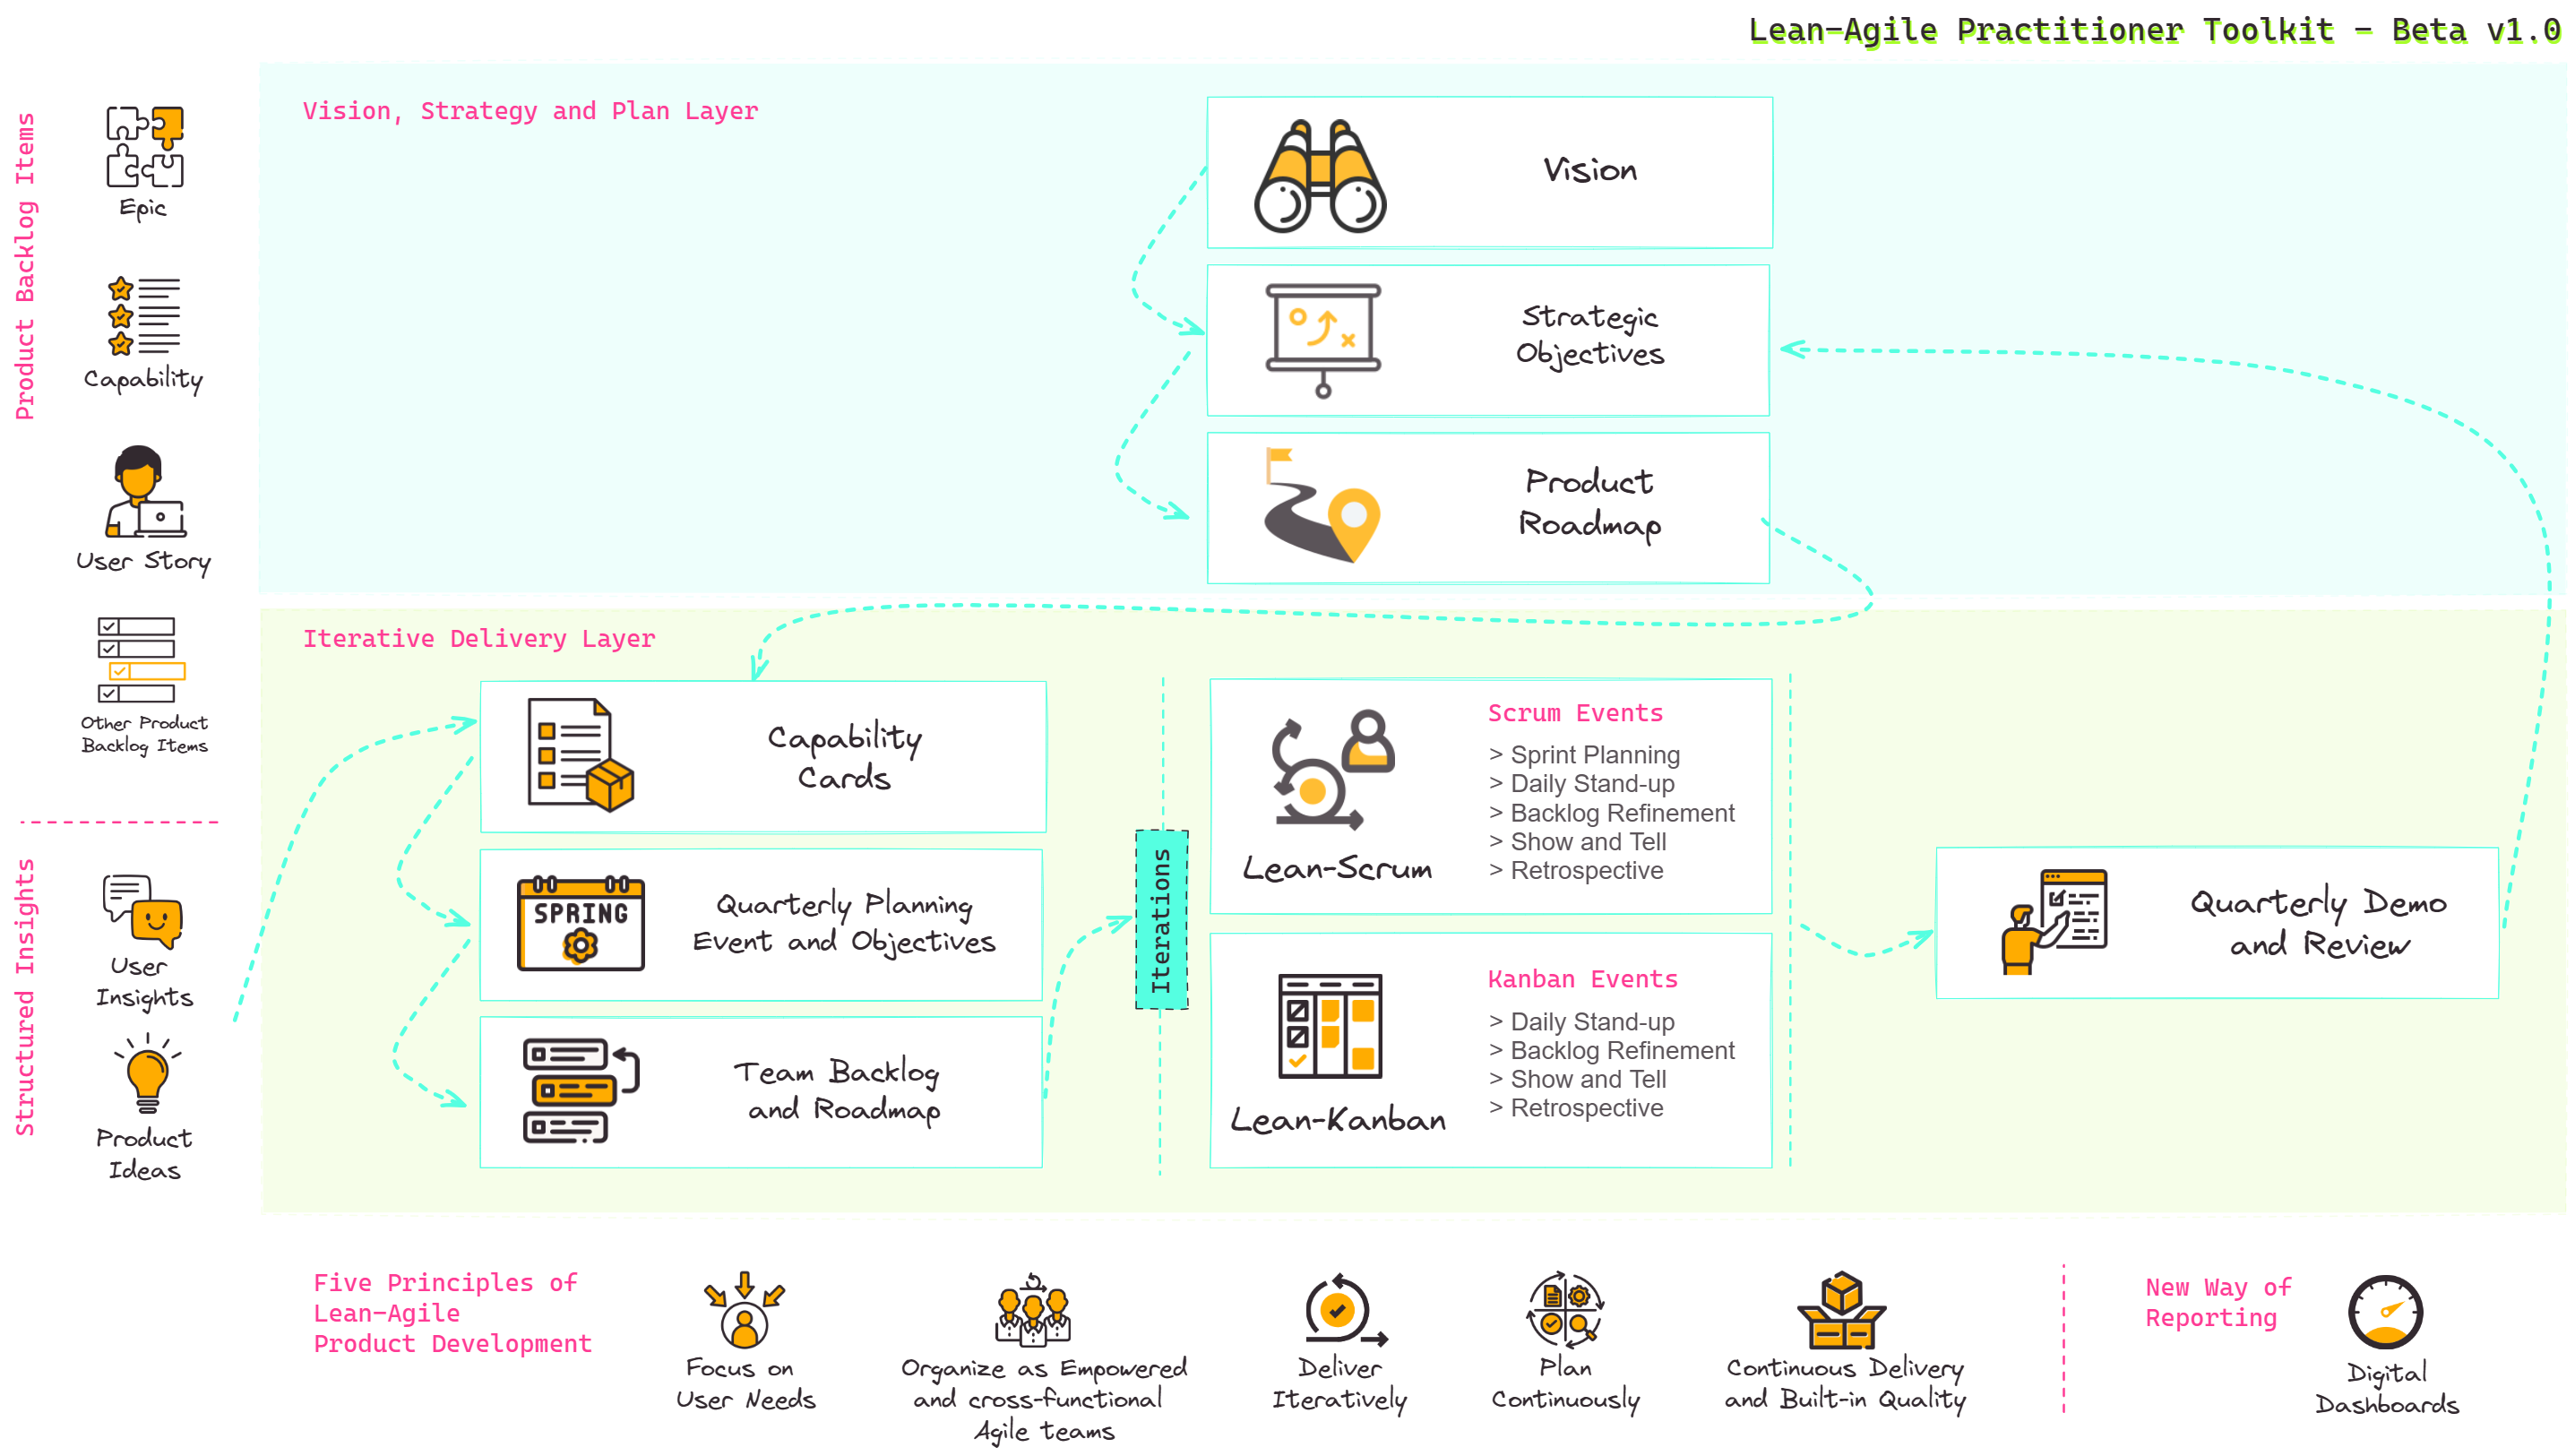 Lean-Agile Practitioner Toolkit - Beta1.0